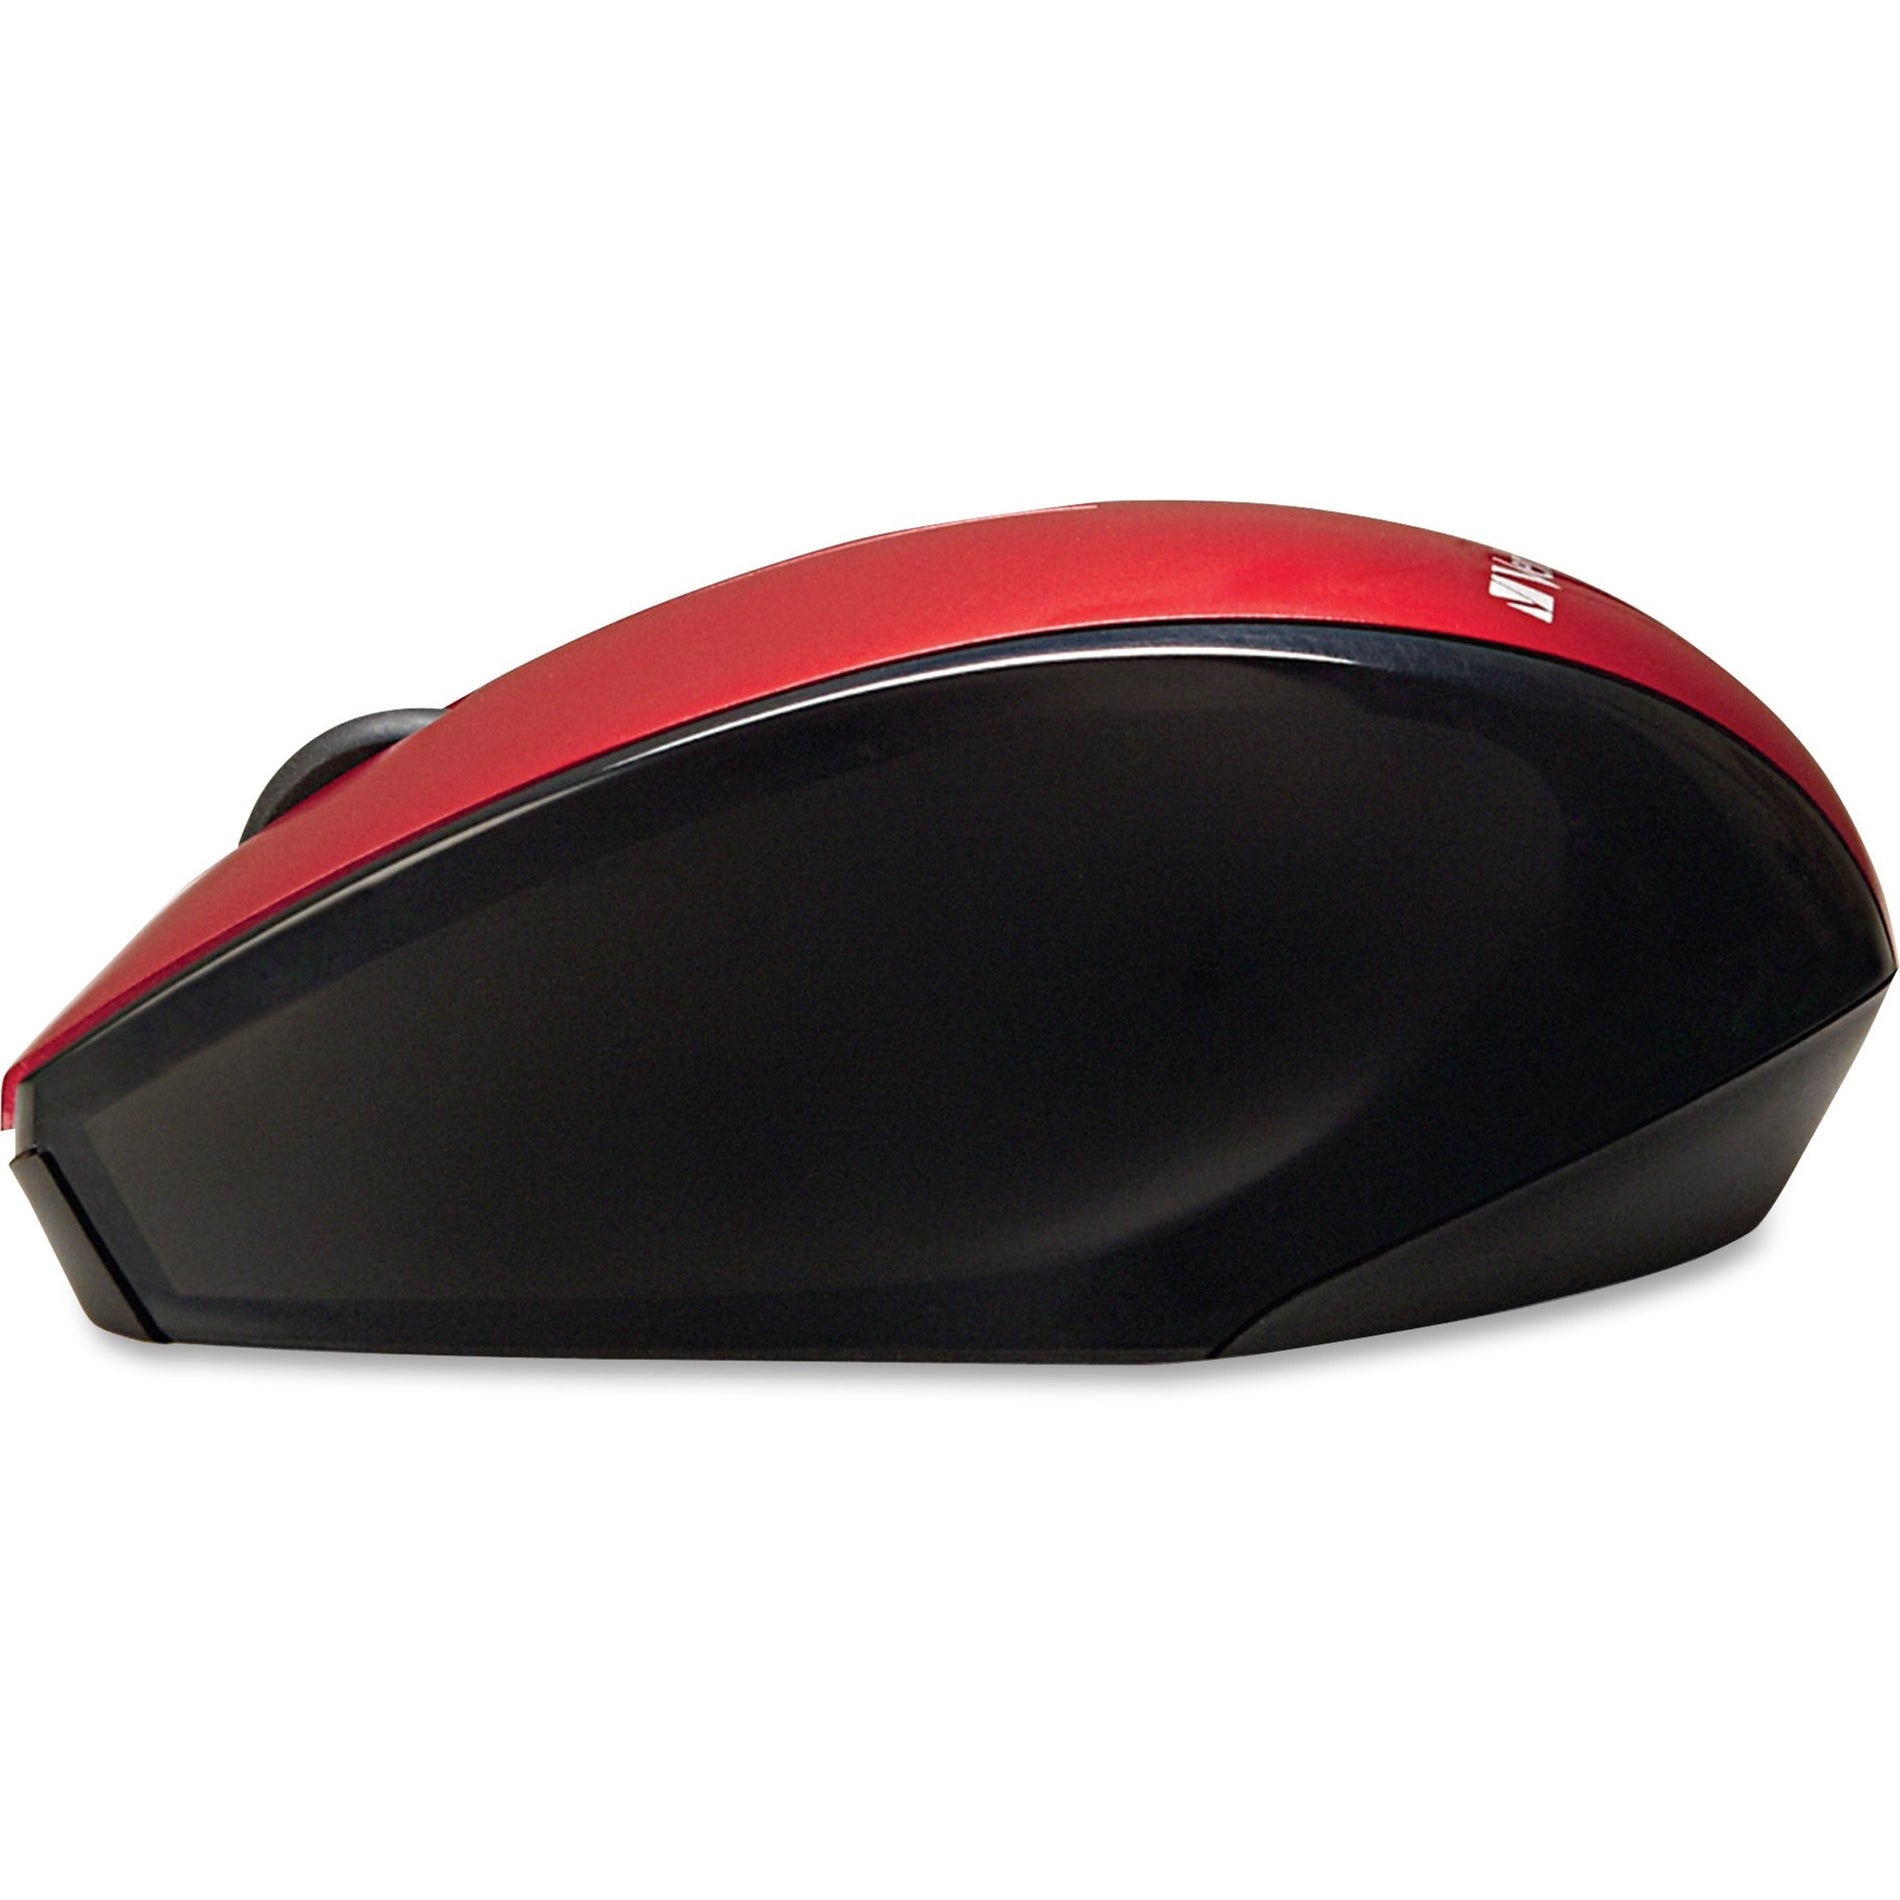 Verbatim 97995 Wireless Multi-trac LED Optical Mouse, Red - Comfort Grip, Ergonomic, Contour